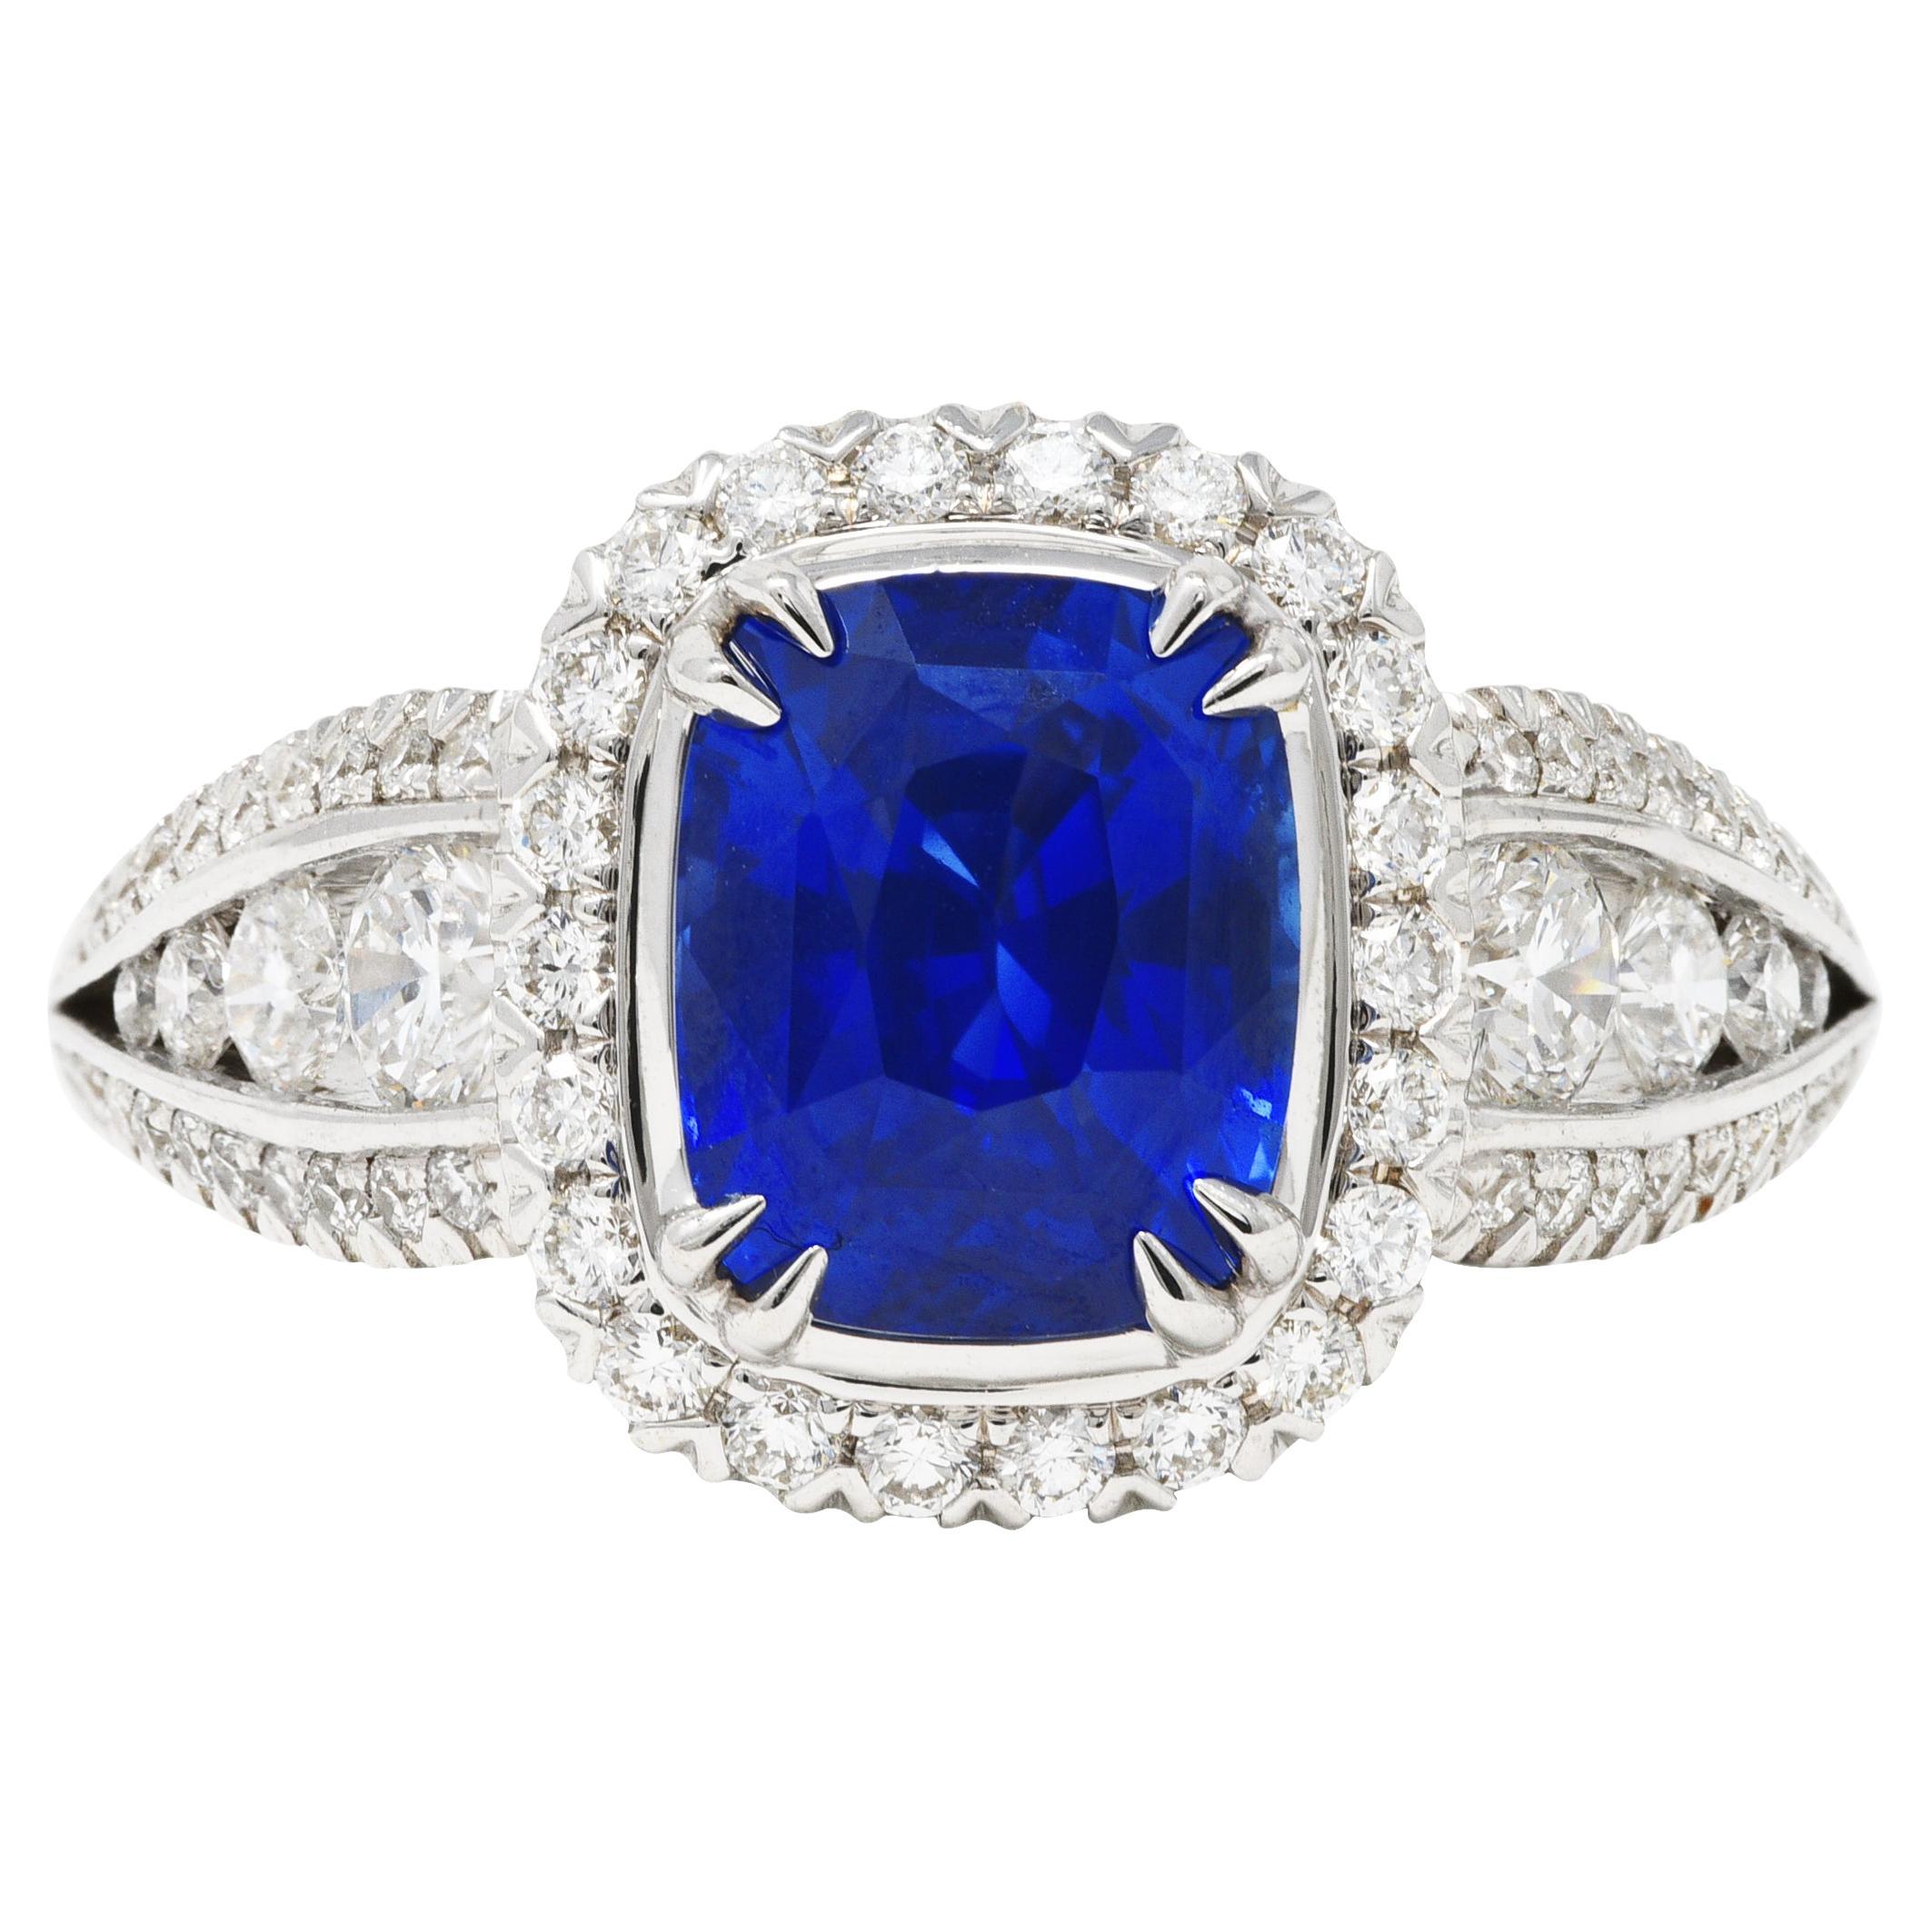 3.60 Carats Blue Sapphire Diamond 18 Karat White Gold Cluster Gemstone Ring